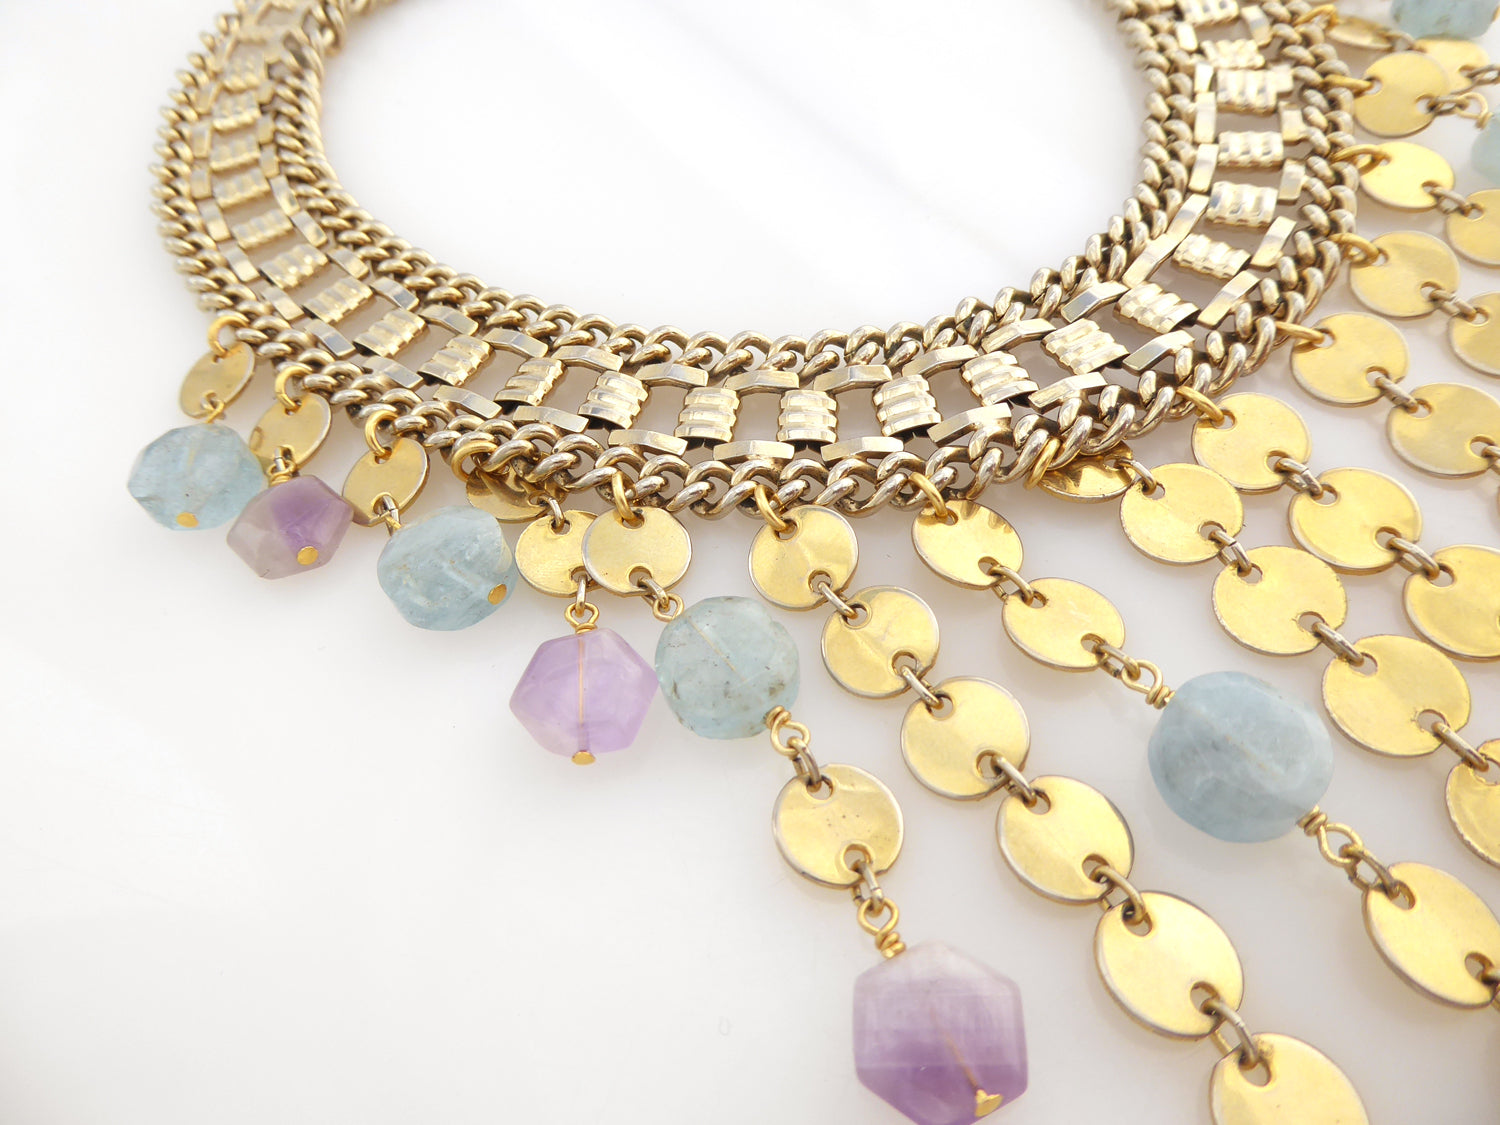 Carmeline aquamarine and amethyst necklace by Jenny Dayco 6